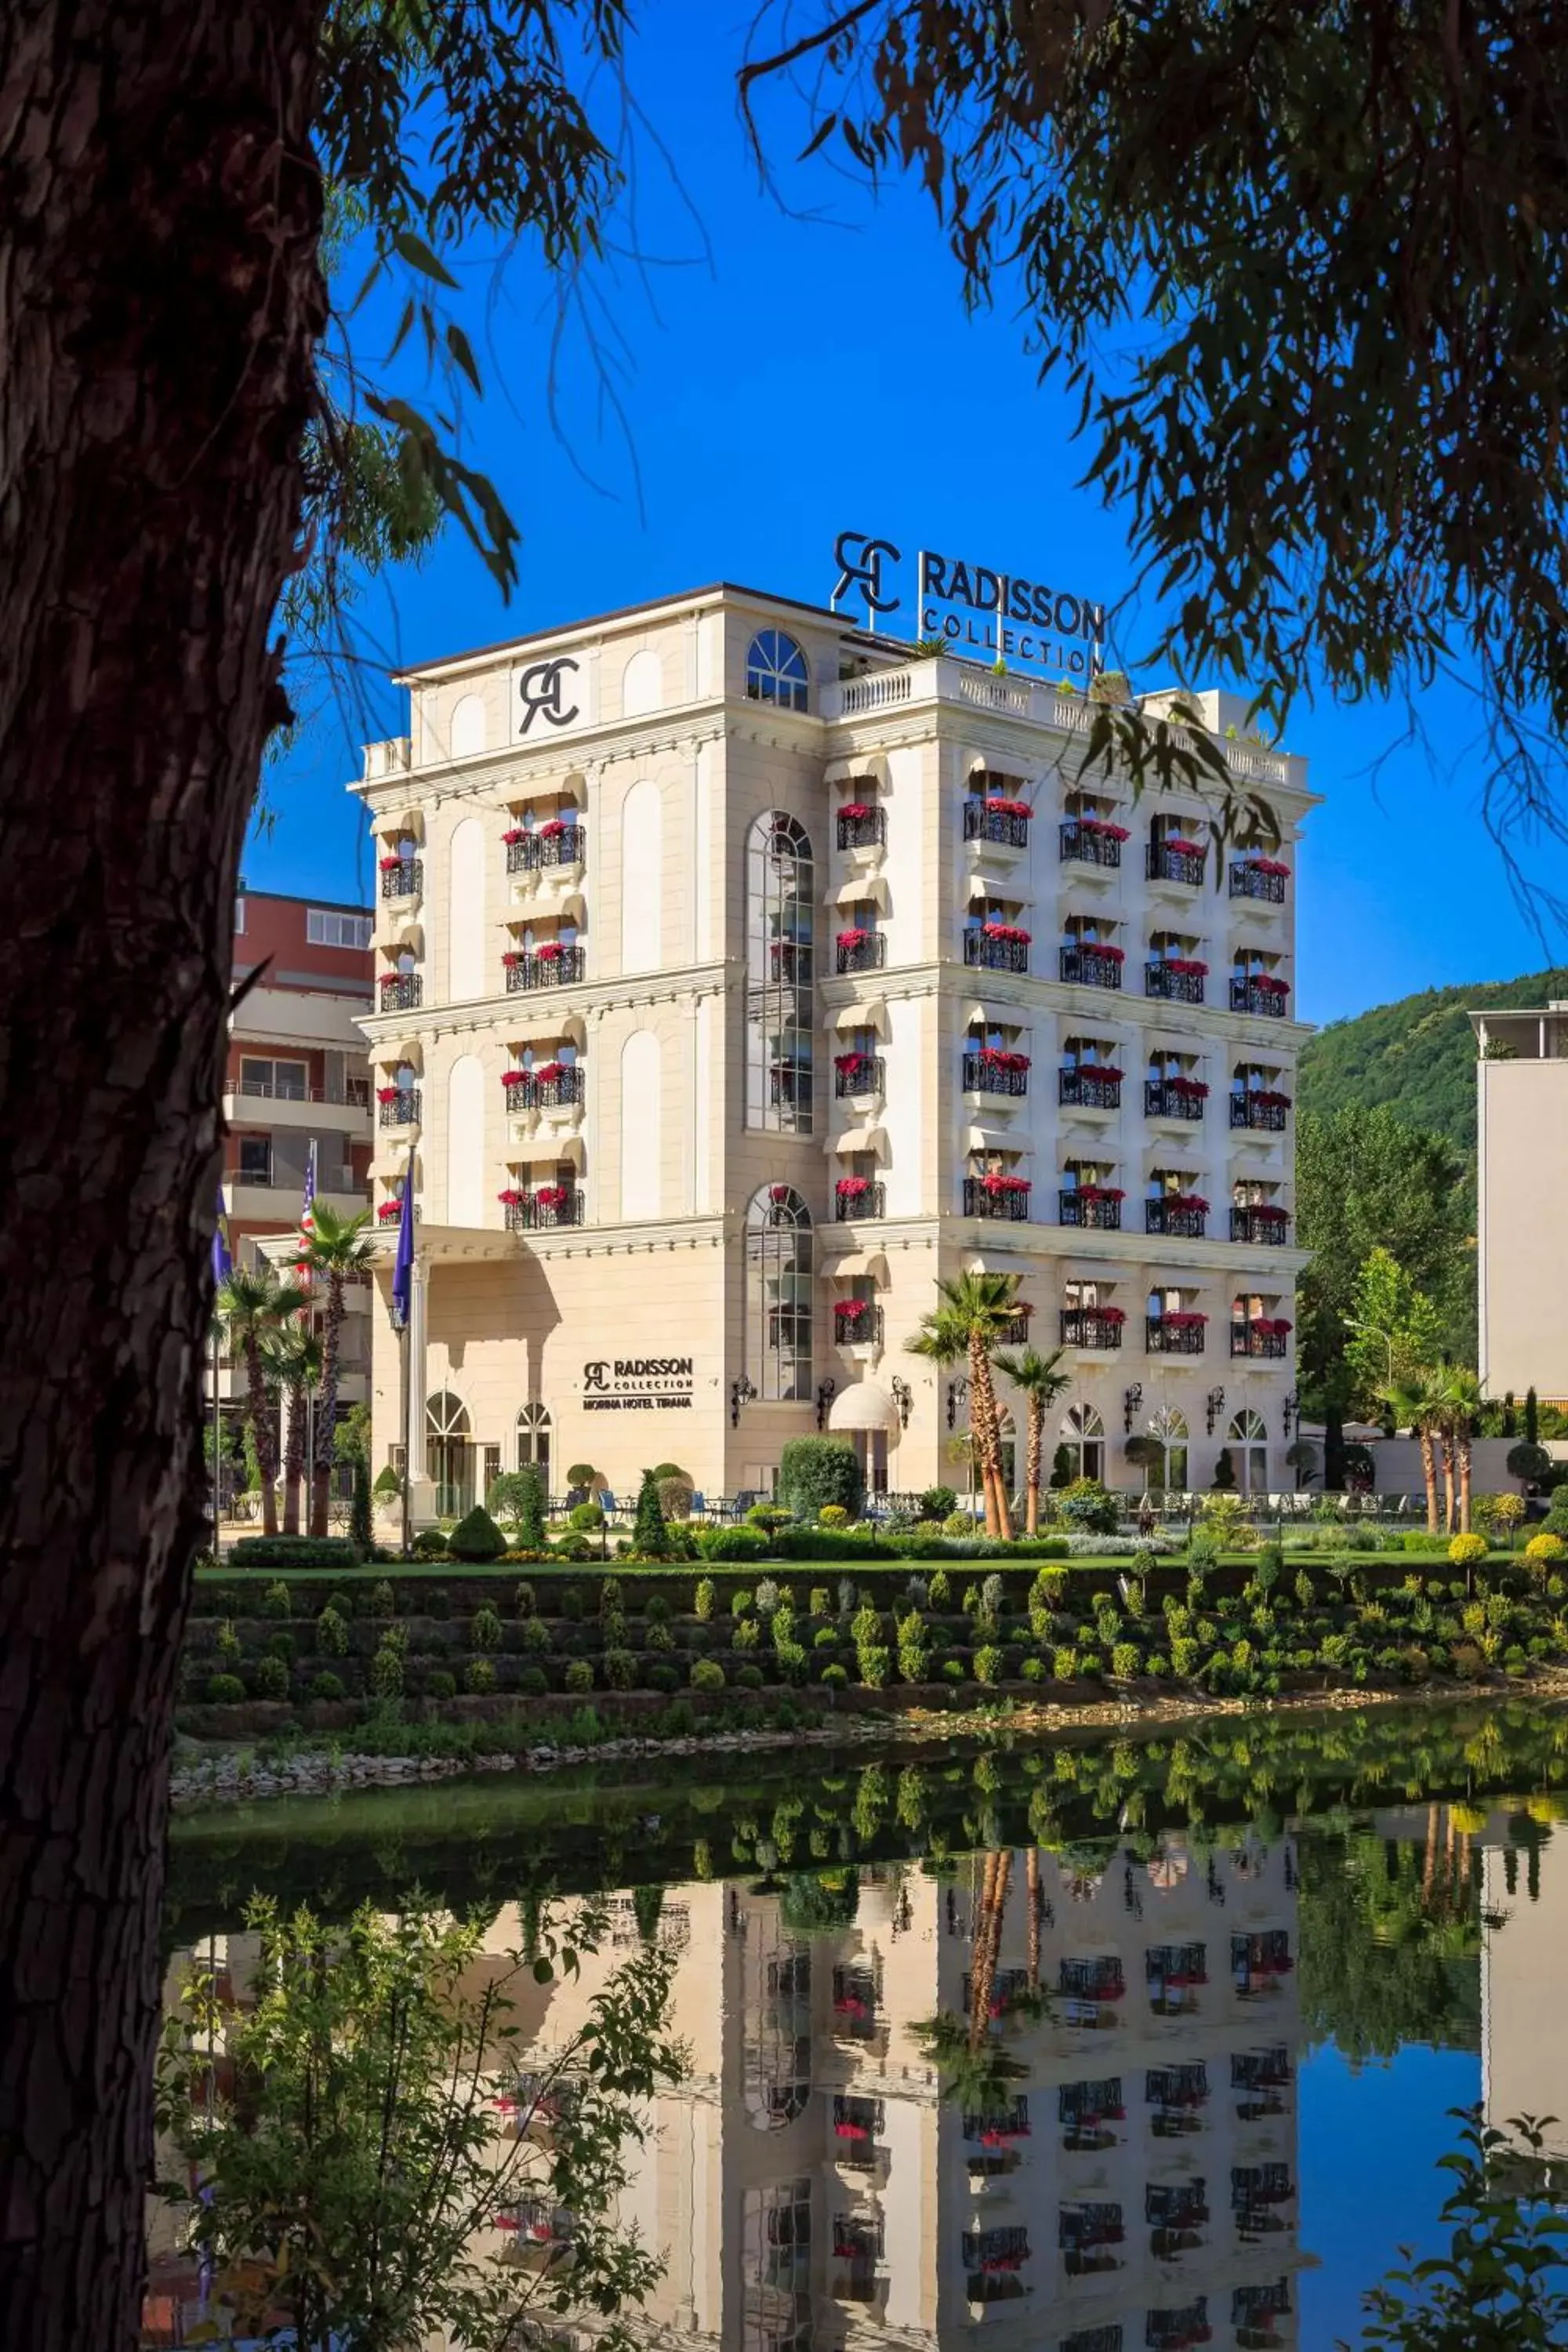 Property Building in Radisson Collection Morina Hotel, Tirana